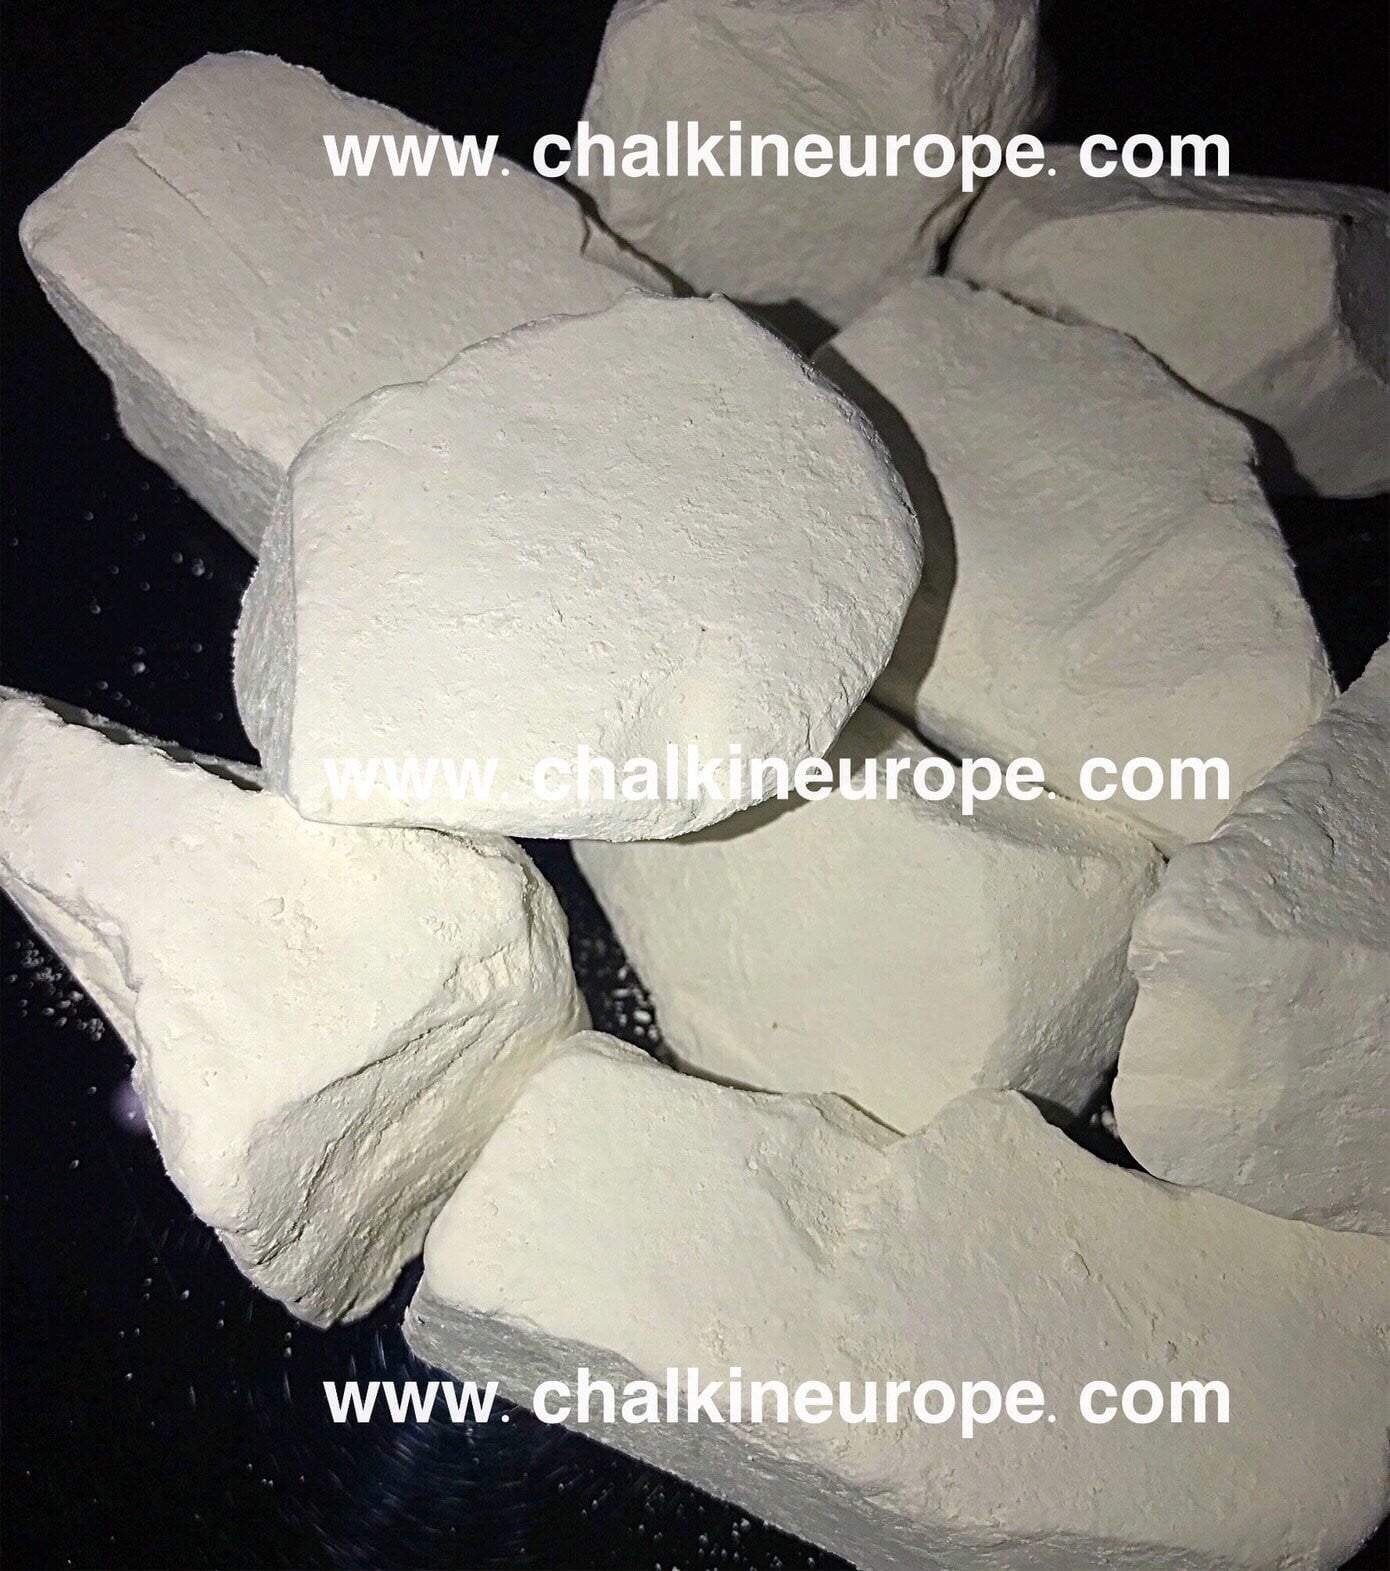 Edible Chalk, Kram Edible Chalk Chunks (Lump) Natural for Eating (food), 4 oz (113 g)